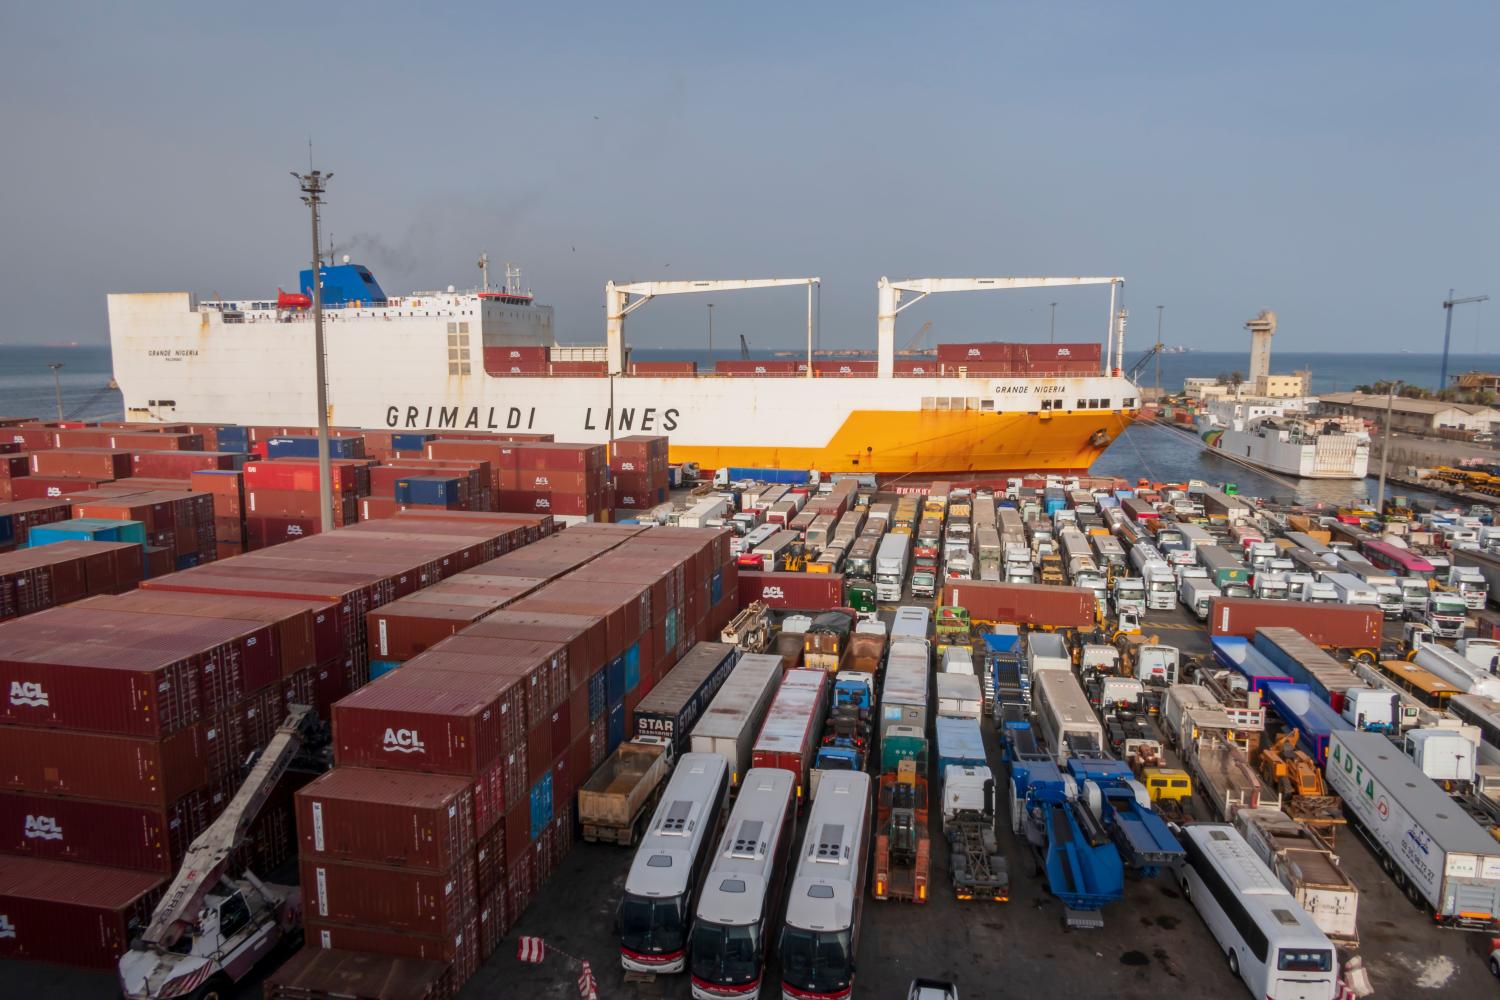 Dakar, Senegal - July 11, 2019: Ro-ro cargo ship Grande Nigeria in the port of Dakar